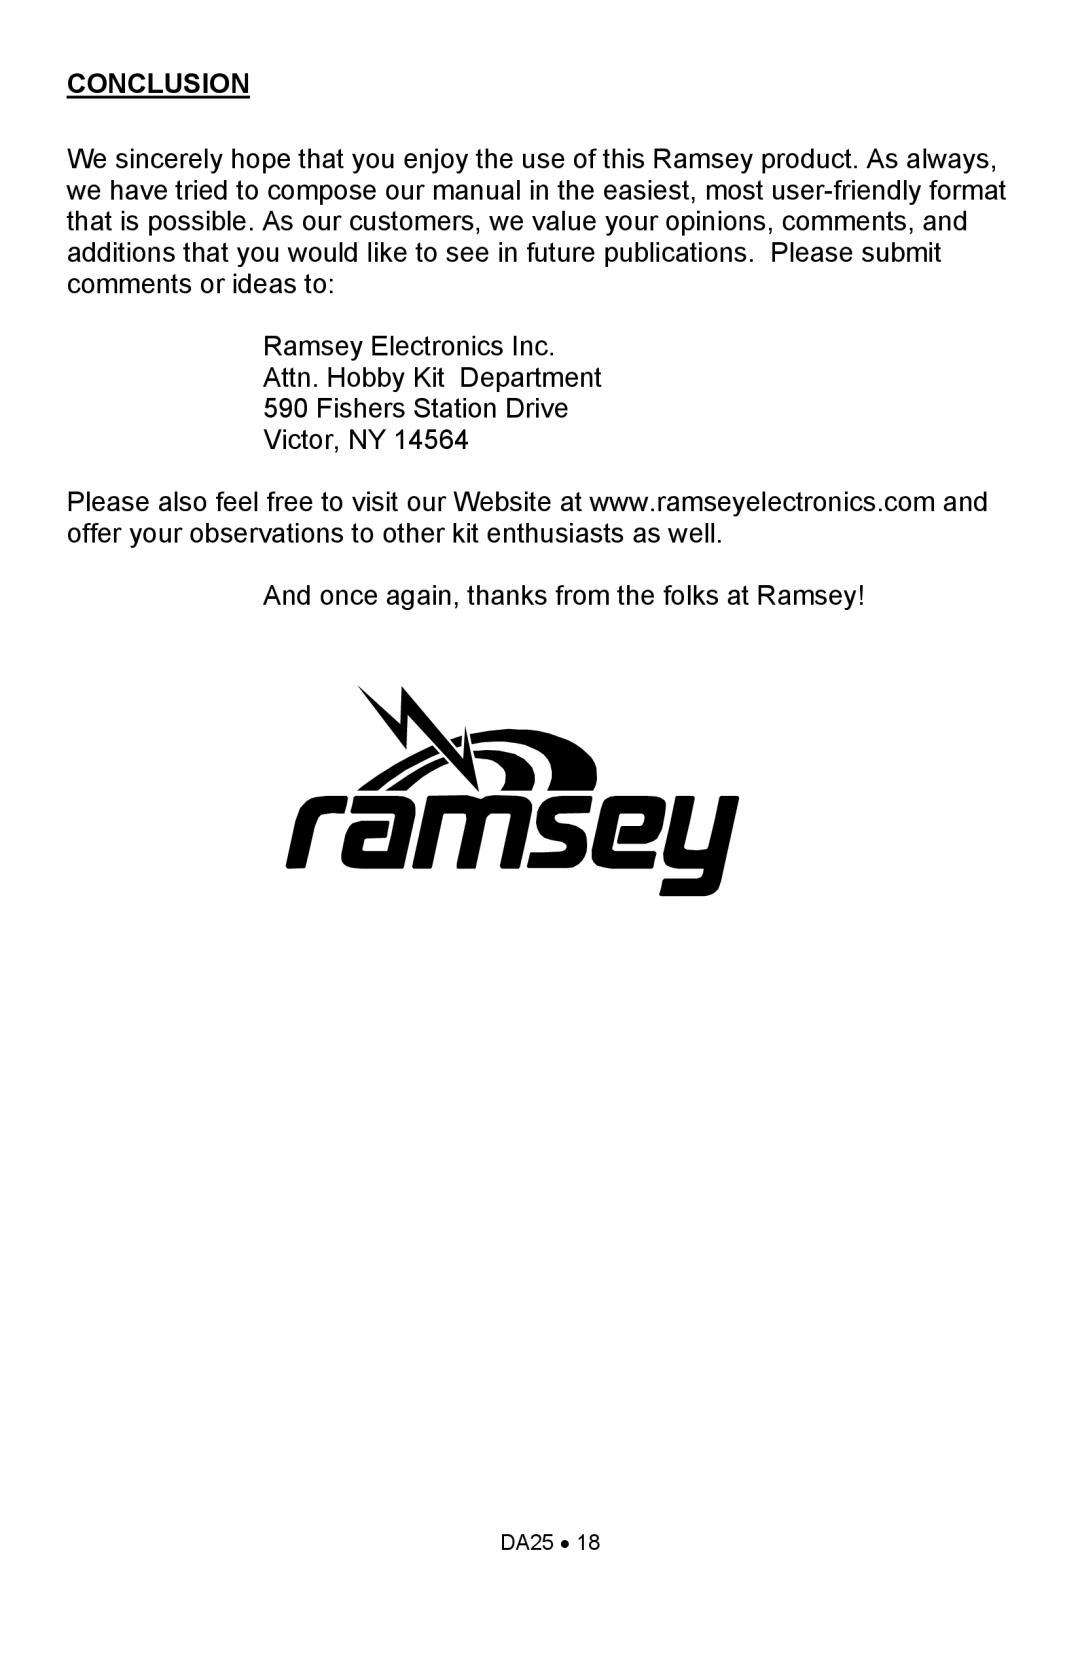 Ramsey Electronics DA25 manual Conclusion 